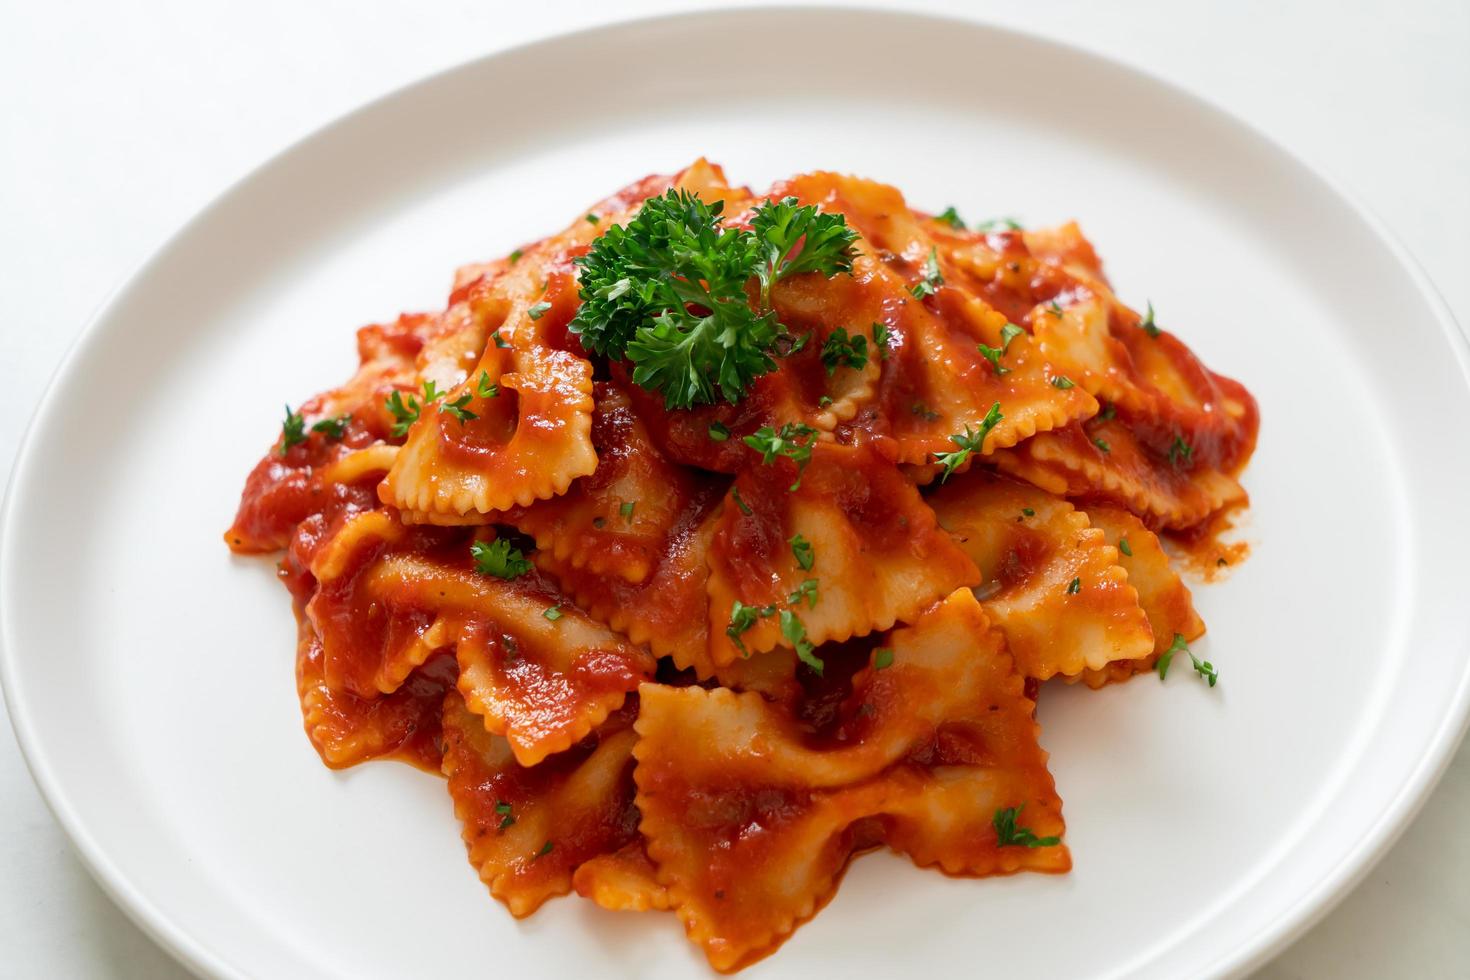 Farfalle-Nudeln in Tomatensauce mit Petersilie - italienische Küche foto